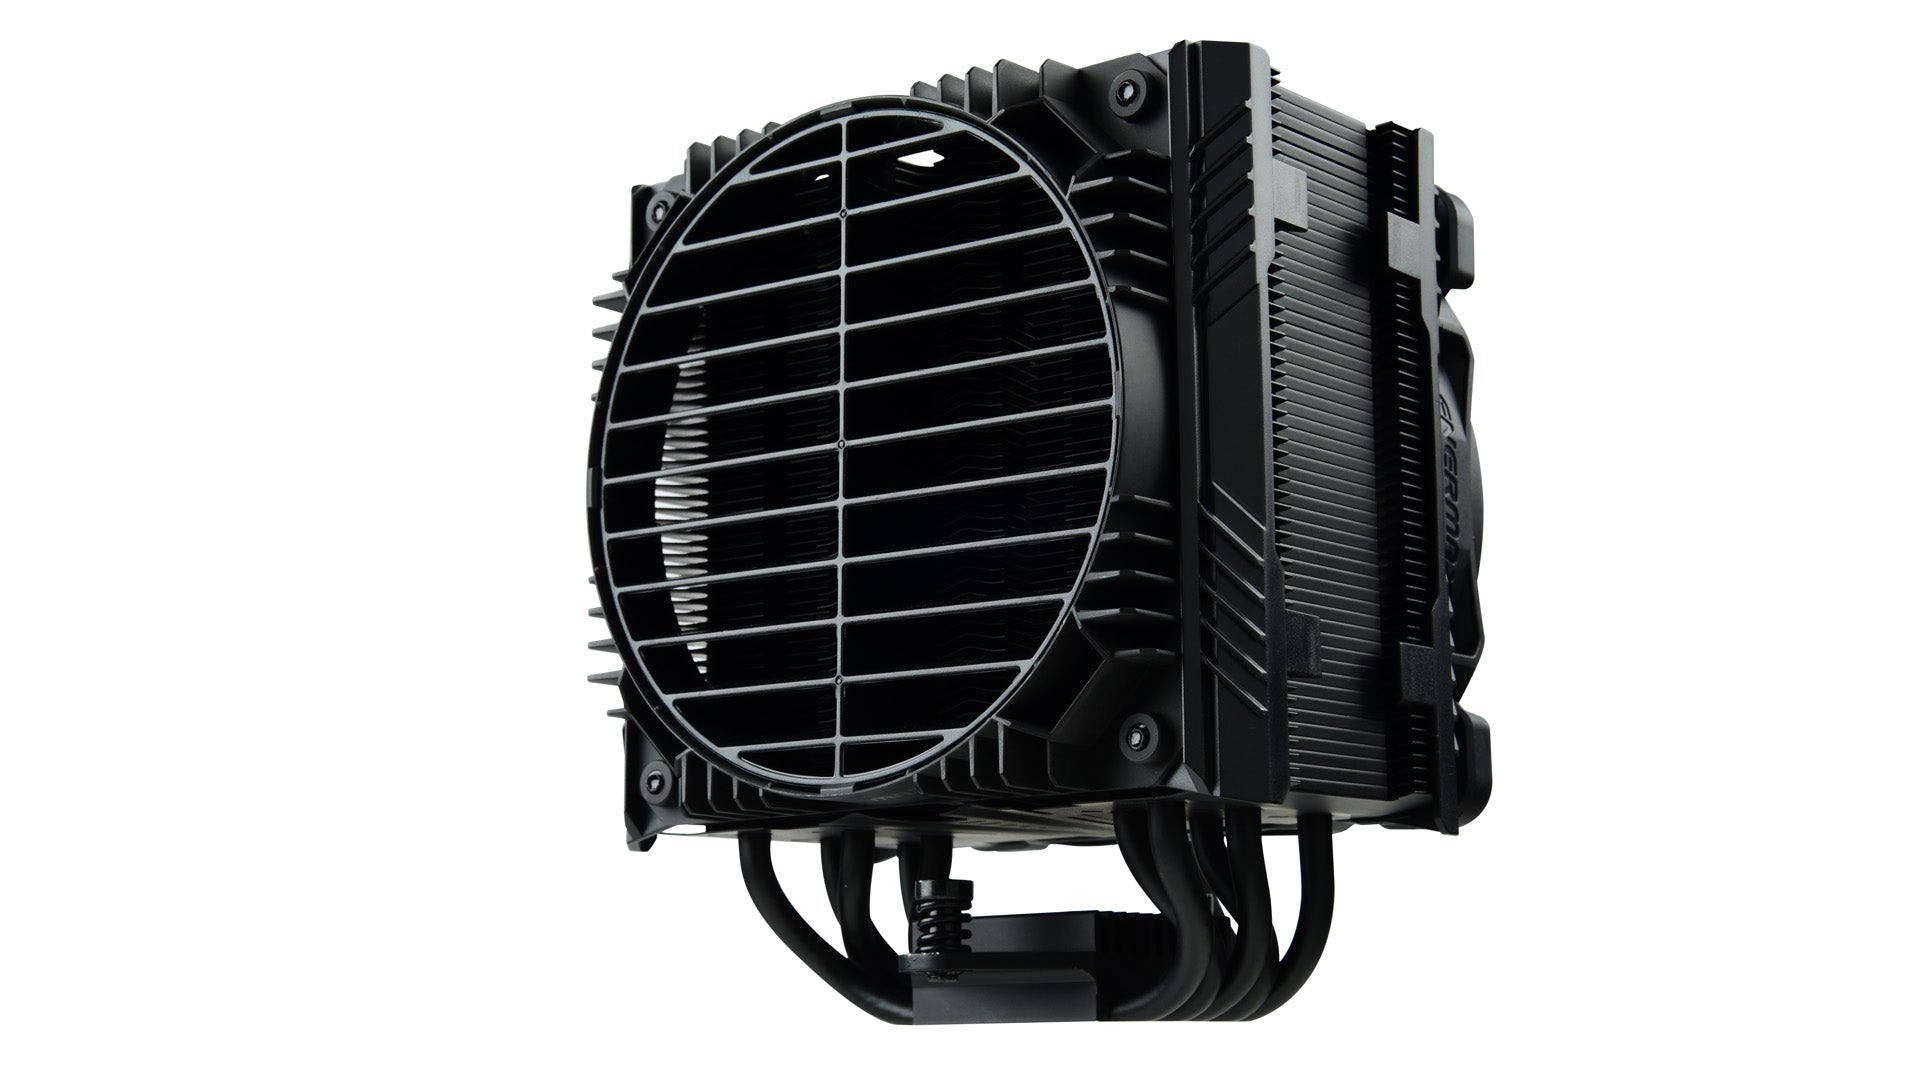 ETS T50 AXE ARGB Air CPU Cooler